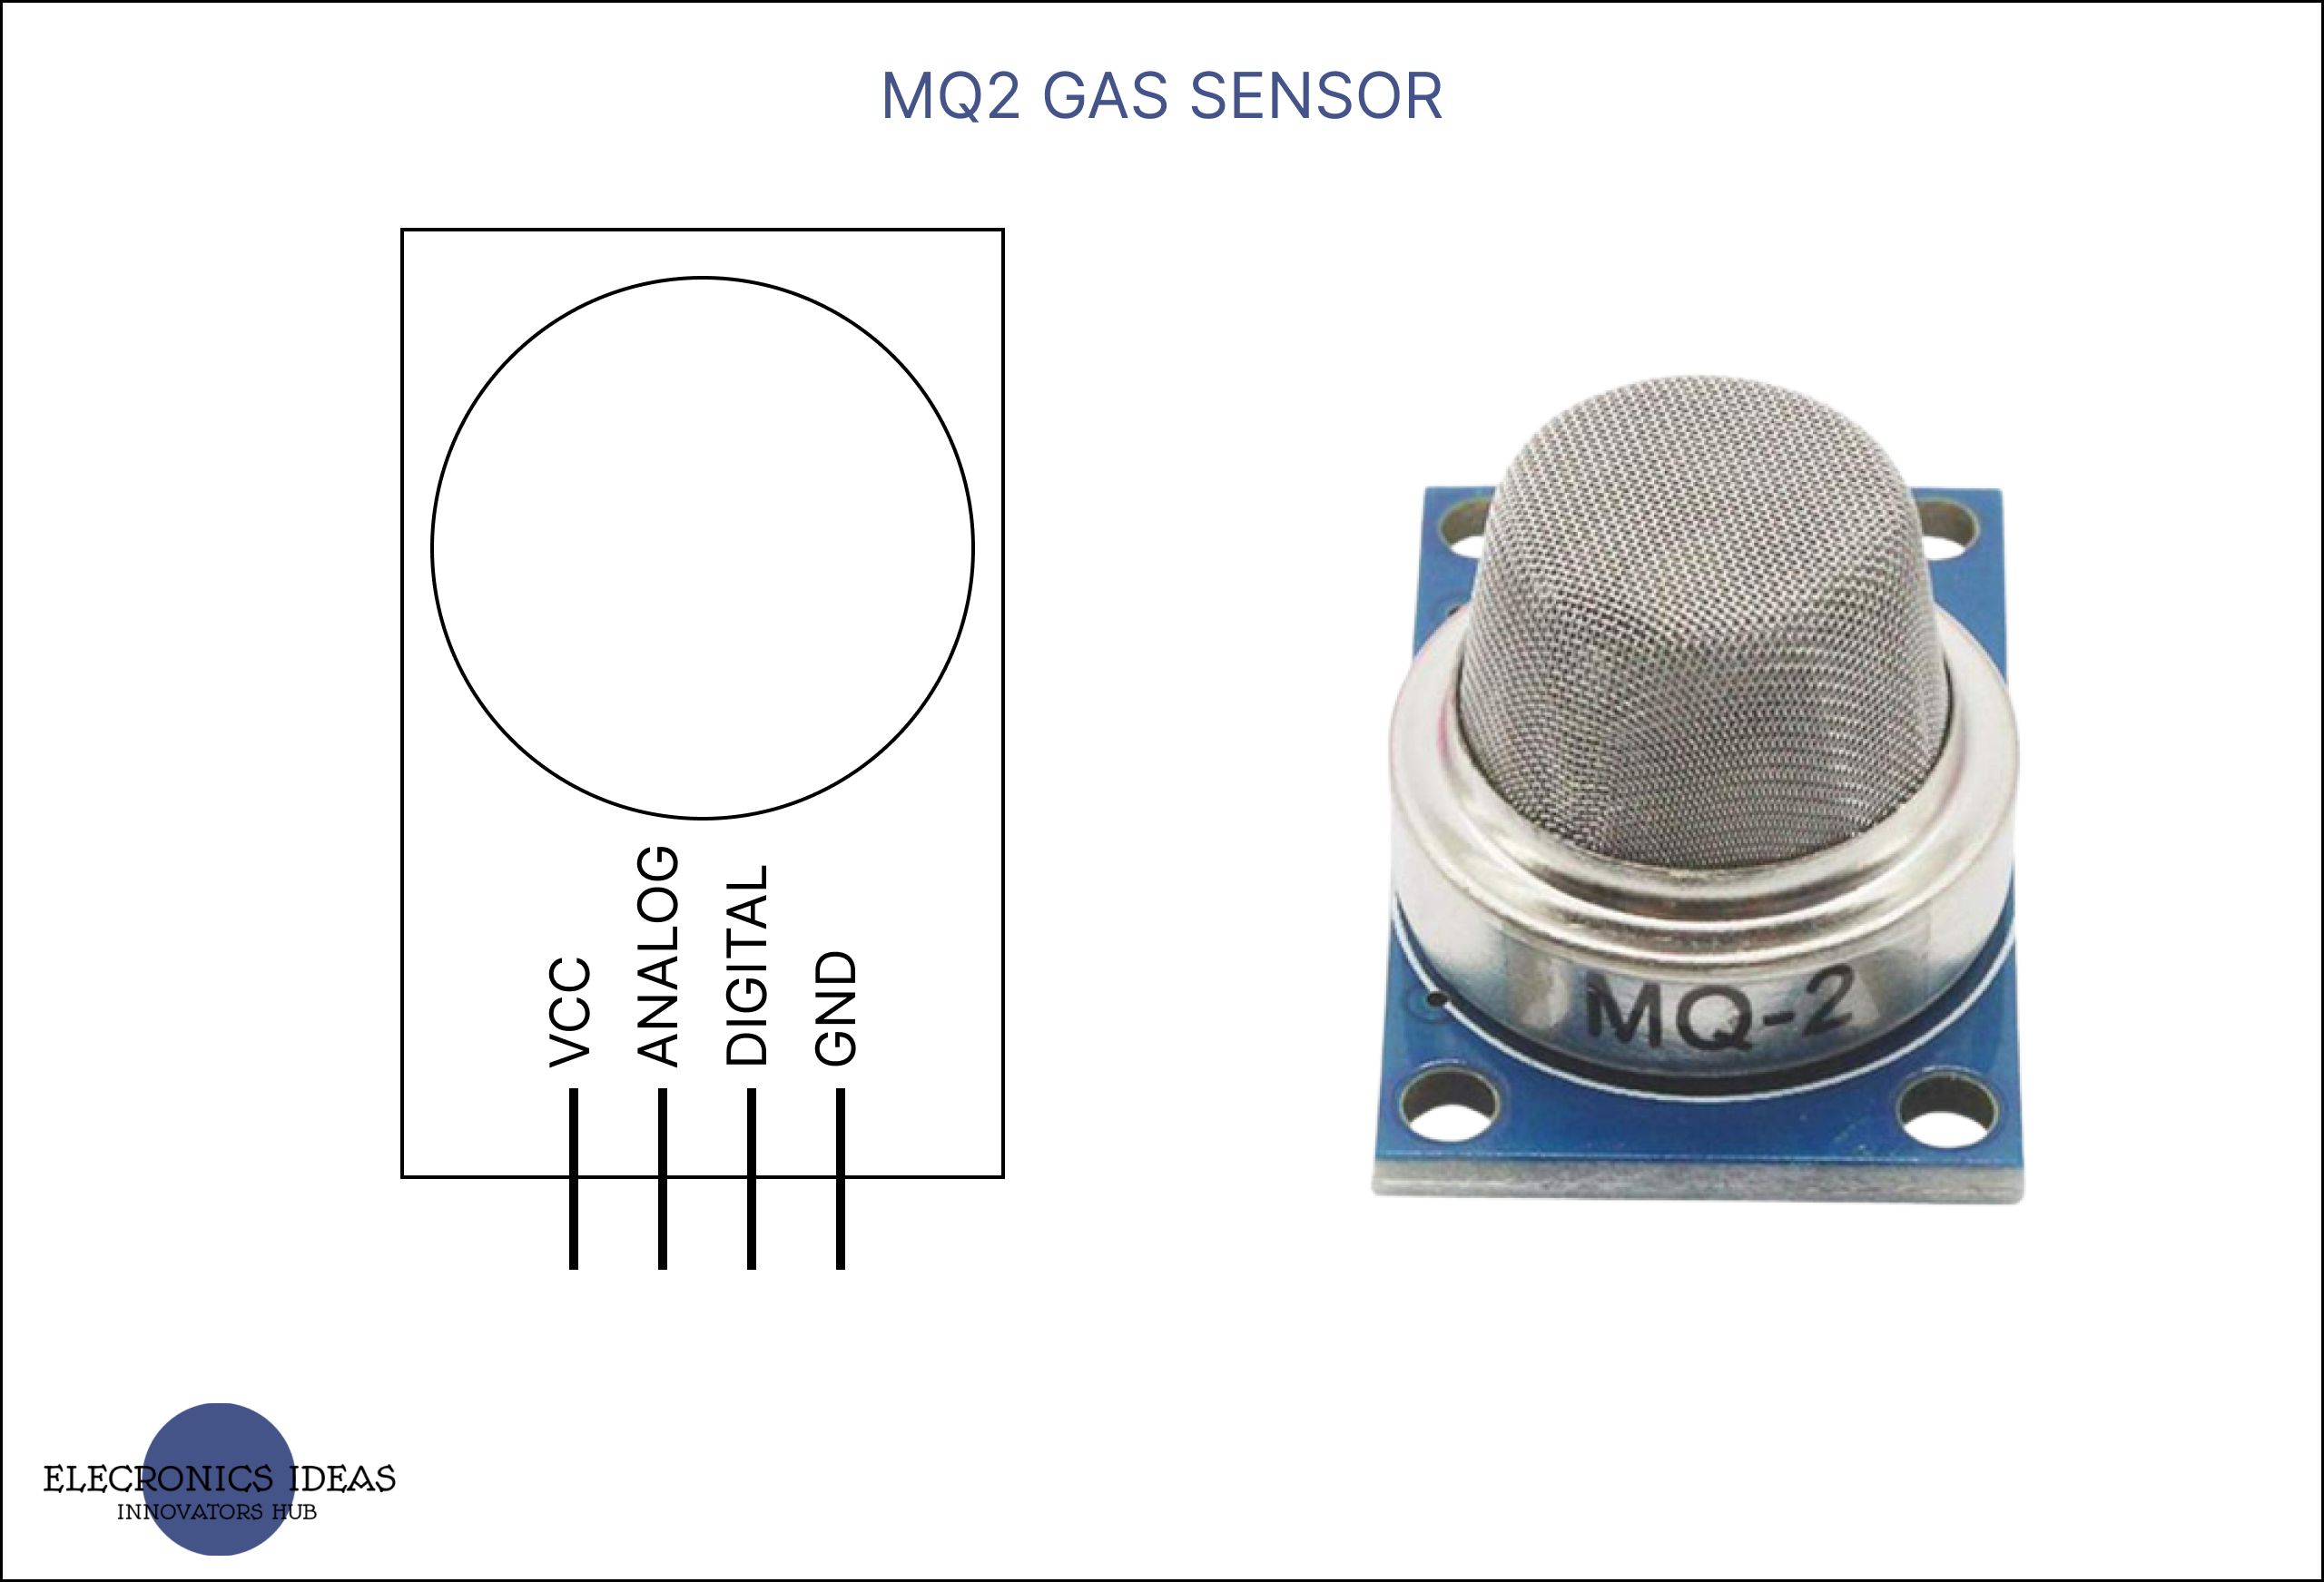 MQ2 Gas sensors